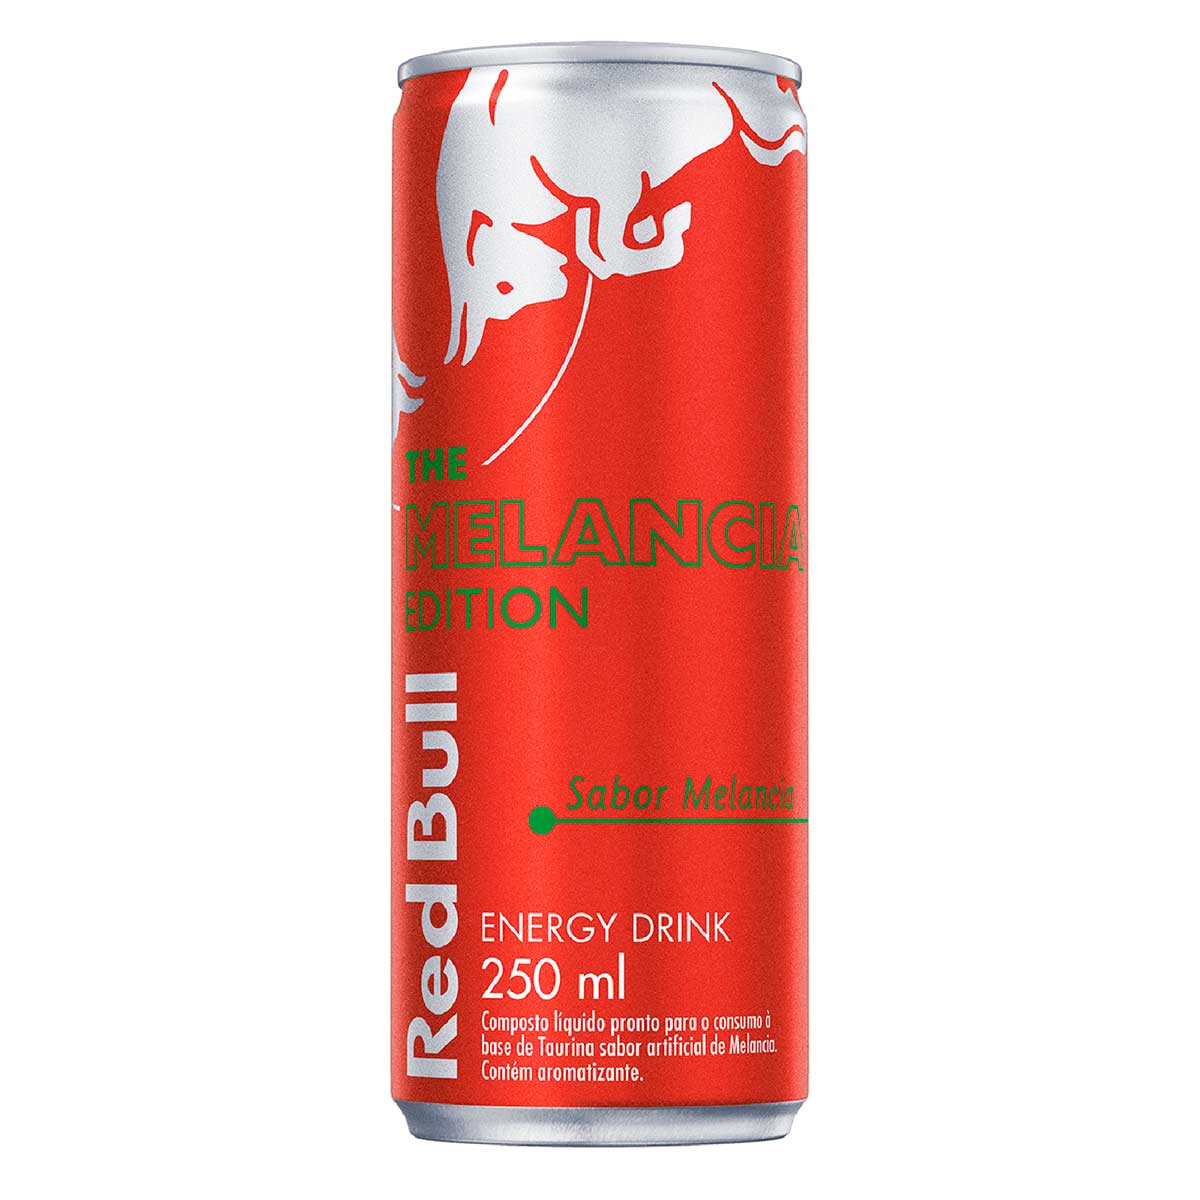 energetico-red-bull-energy-drink-melancia-edition-250-ml-1.jpg